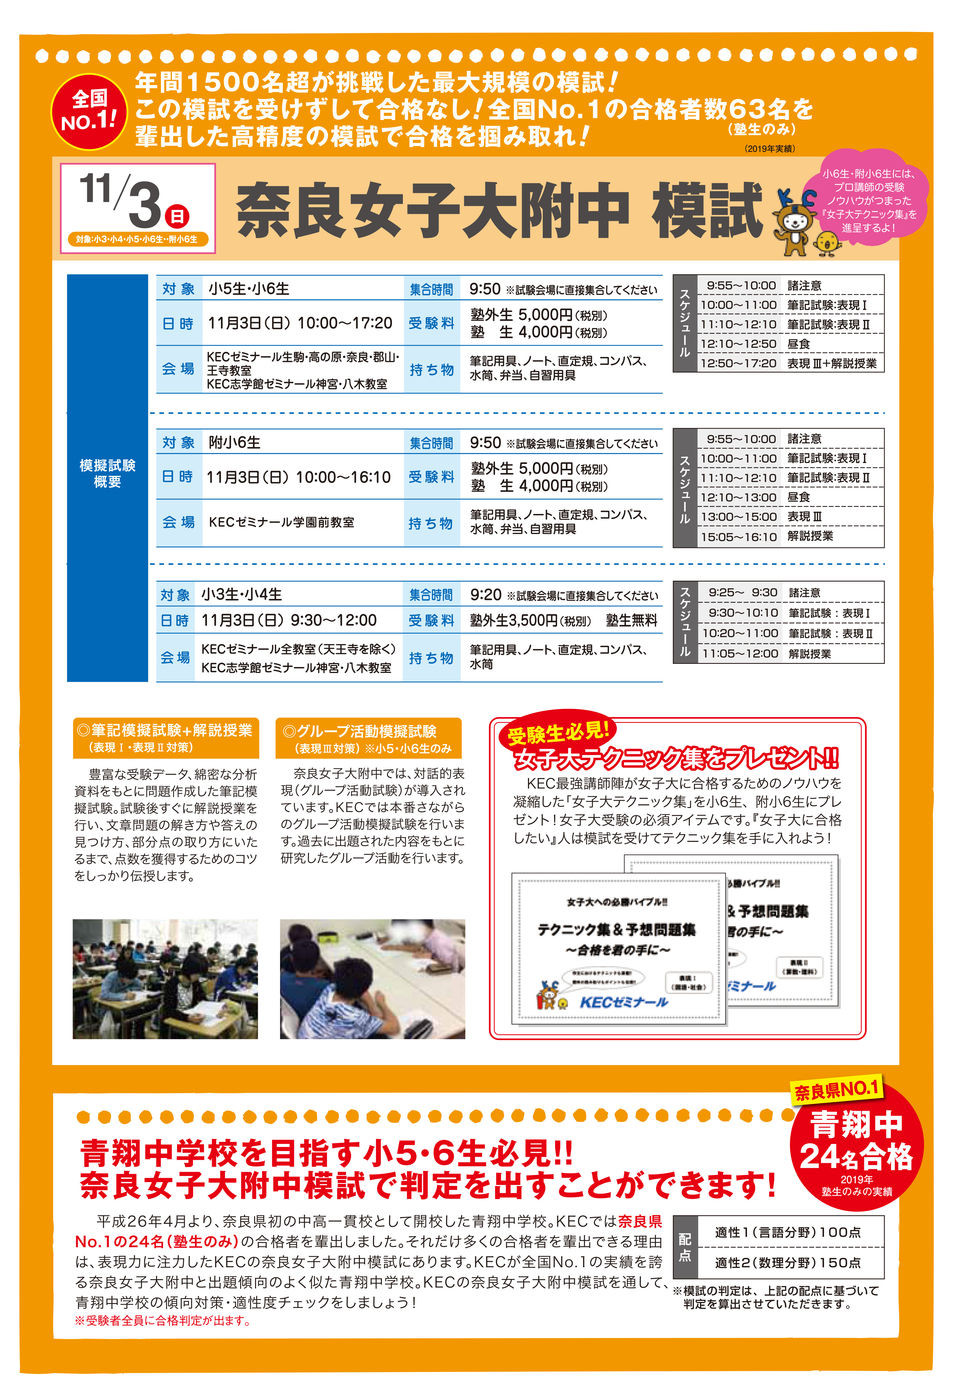 https://www.kec.gr.jp/seminar/information/img/narajyo.jpg